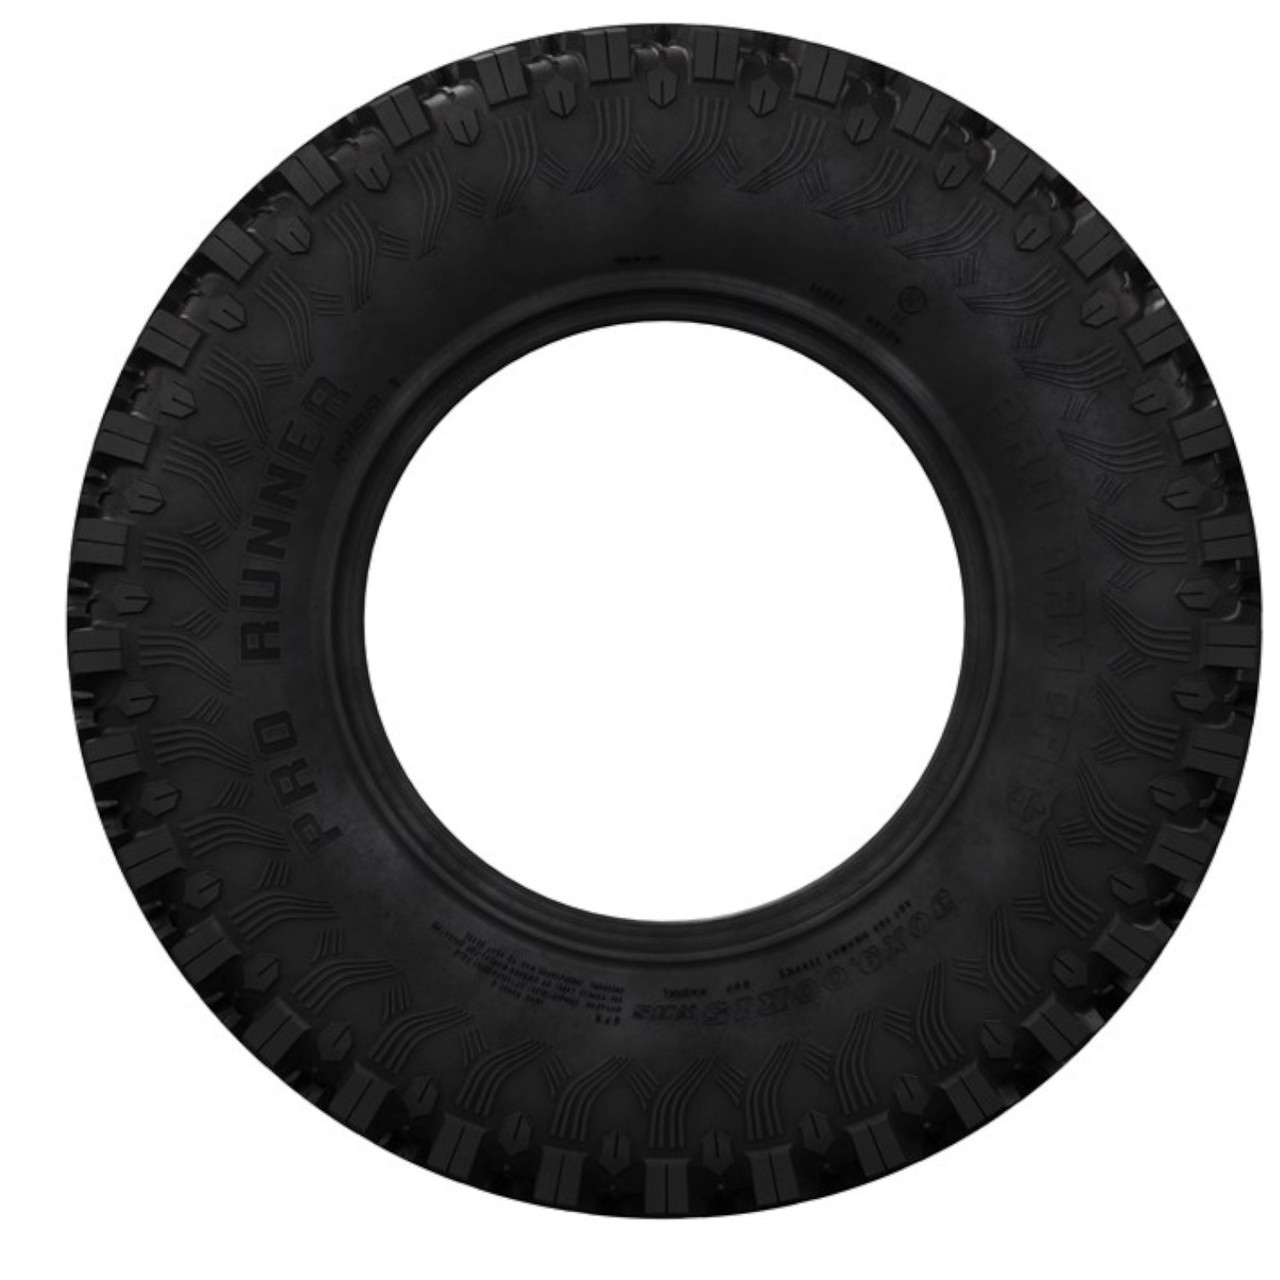 Polaris New OEM, Pro Armor Runner Lightweight Tire, 30x9R15, 5417531